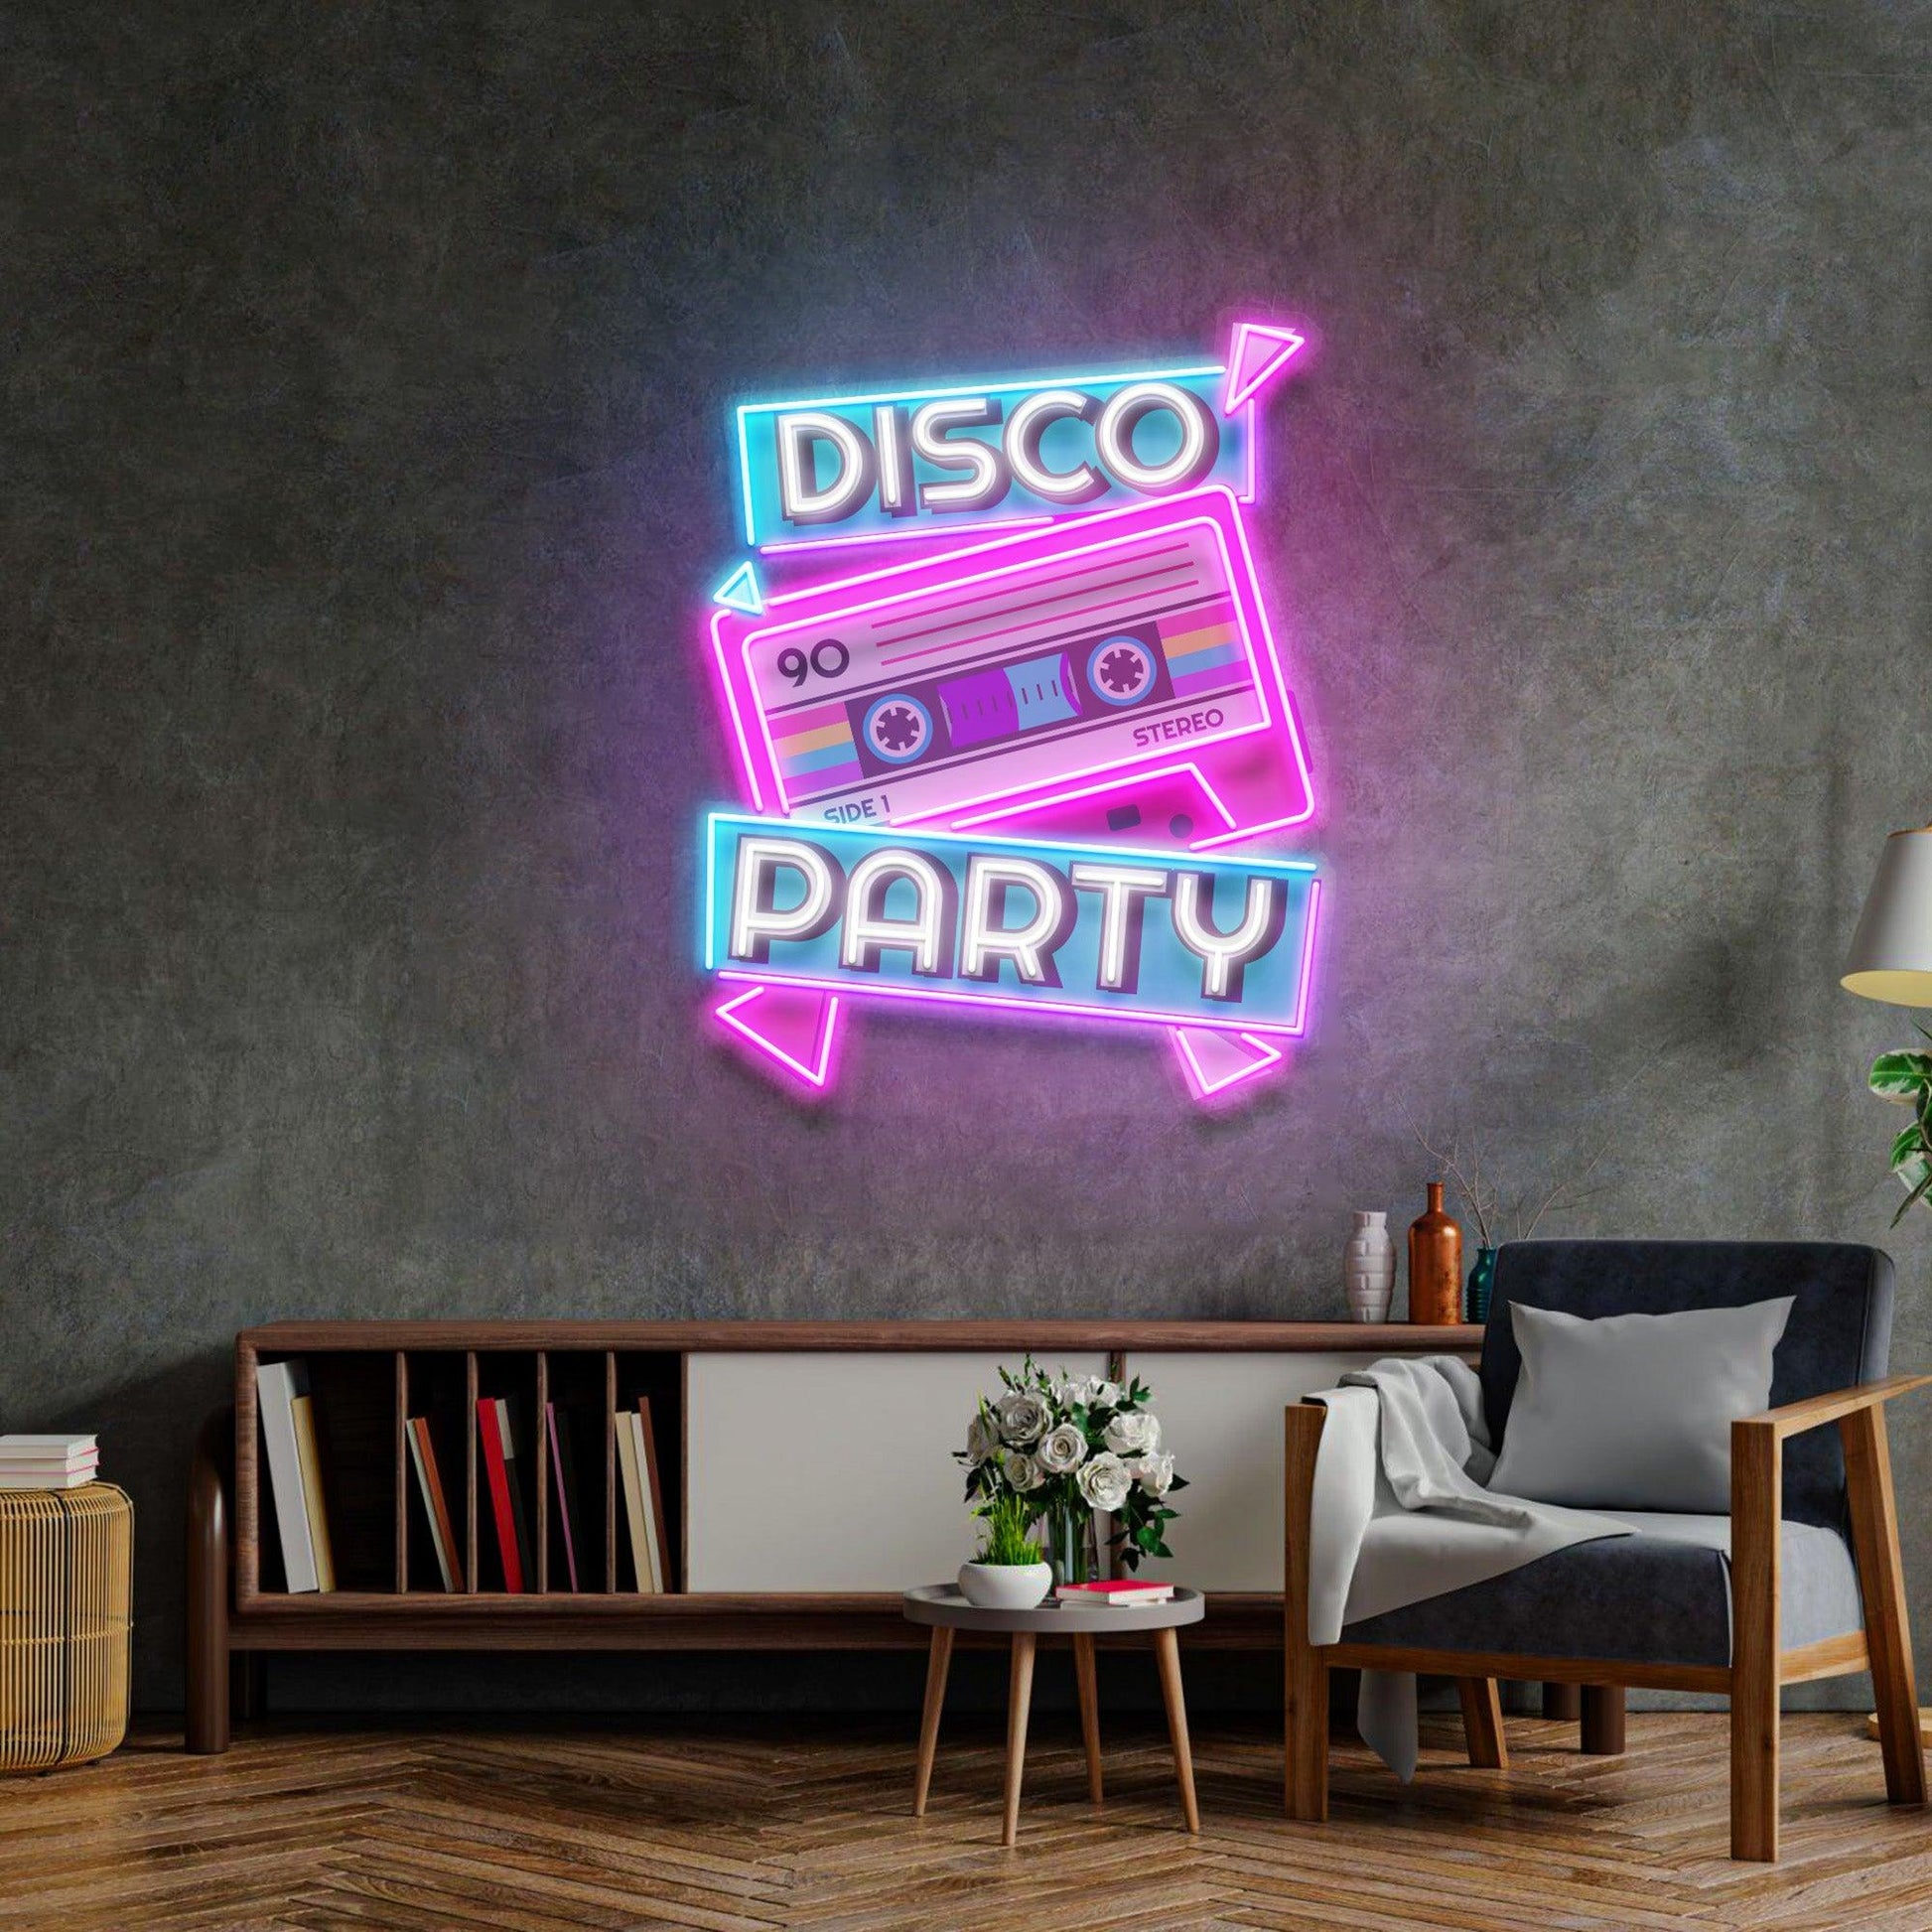 Disco Party Led Neon Acrylic Artwork - Neonzastudio